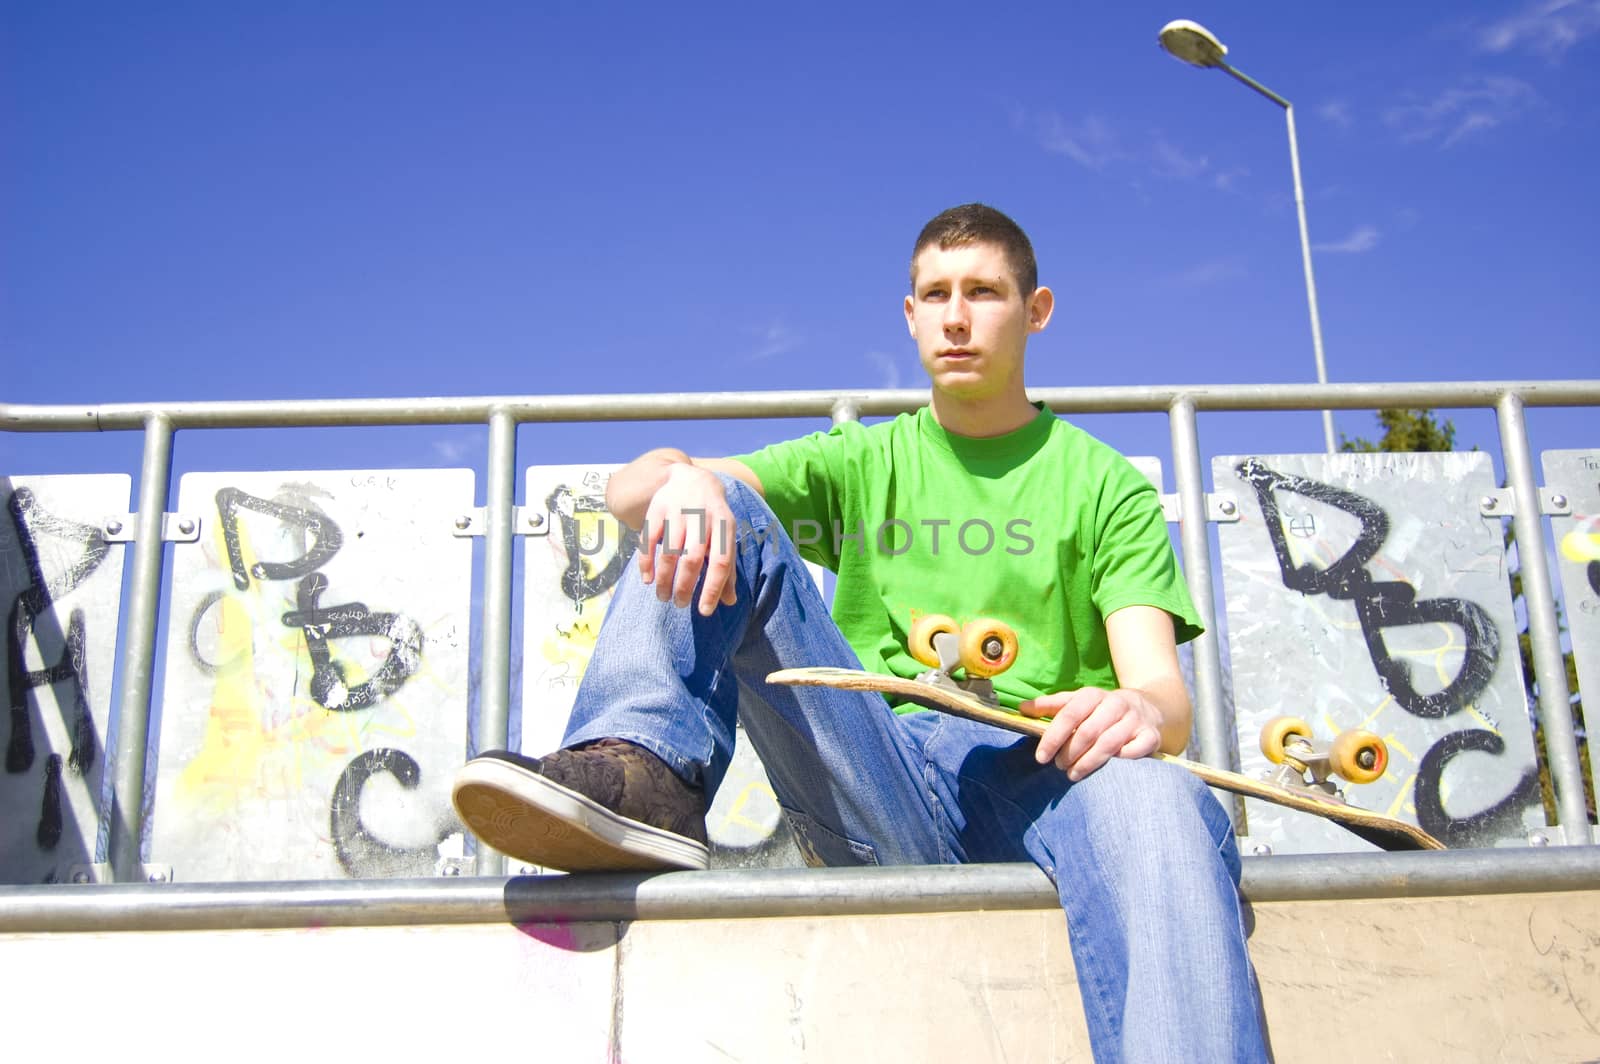 Teenage skateboarder conceptual image. Teenage skateboarder sits in skate-park.